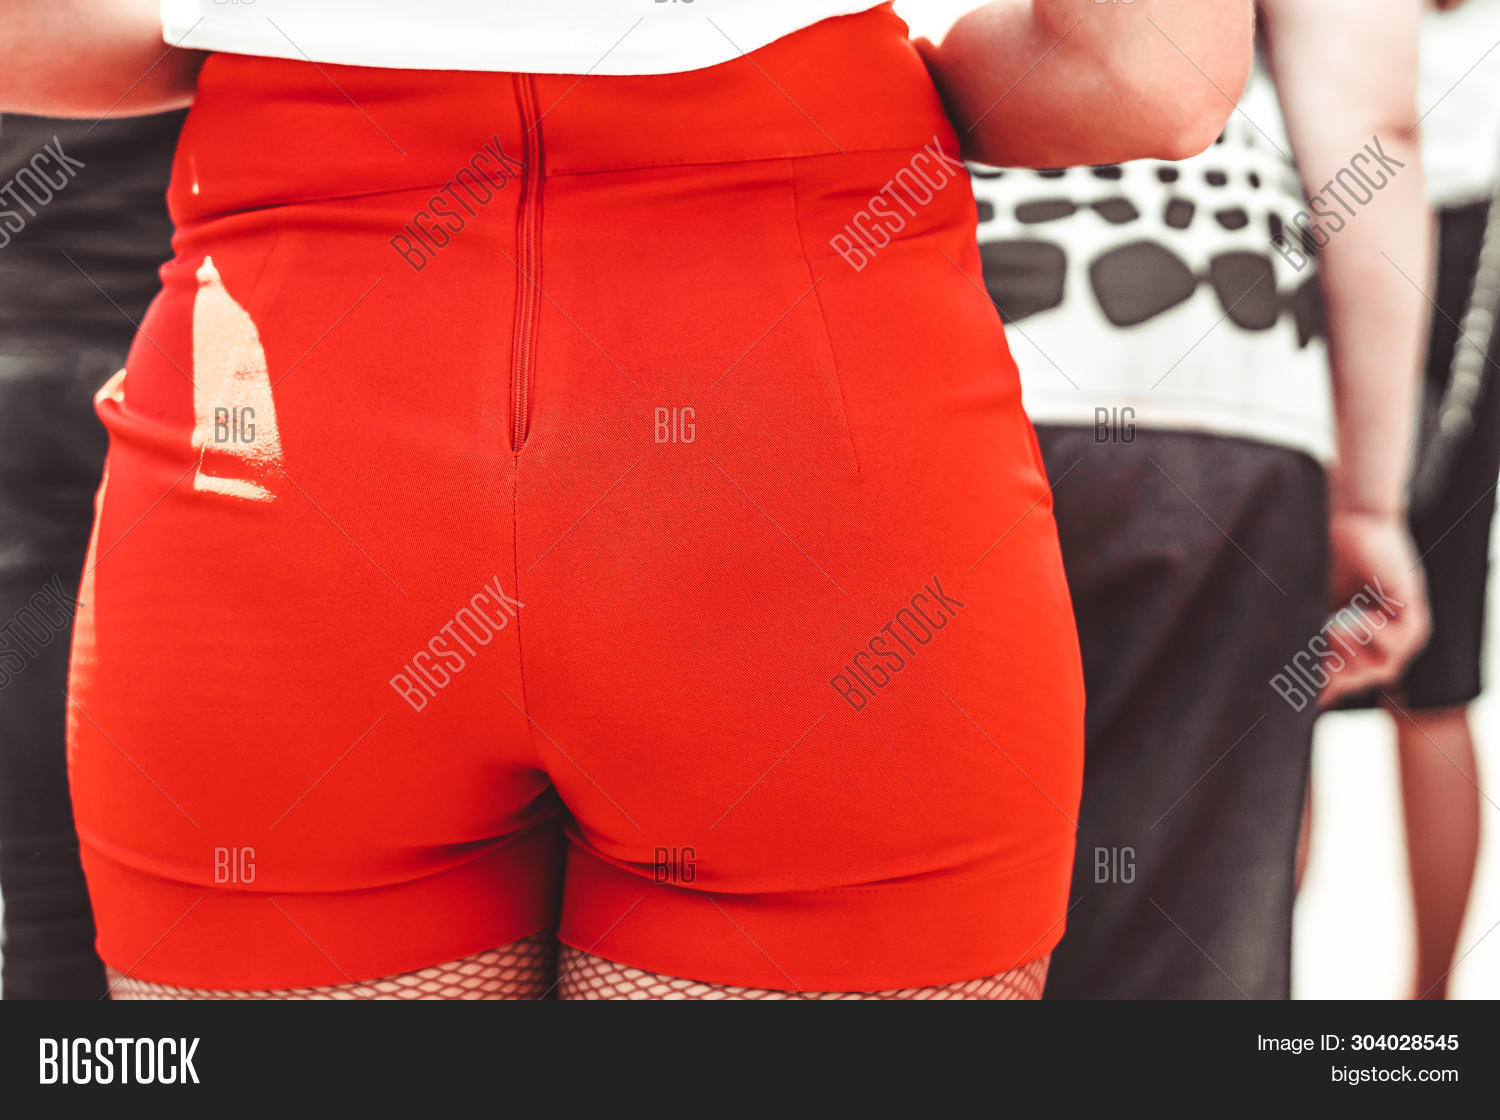 brittney creamer share great ass in shorts photos